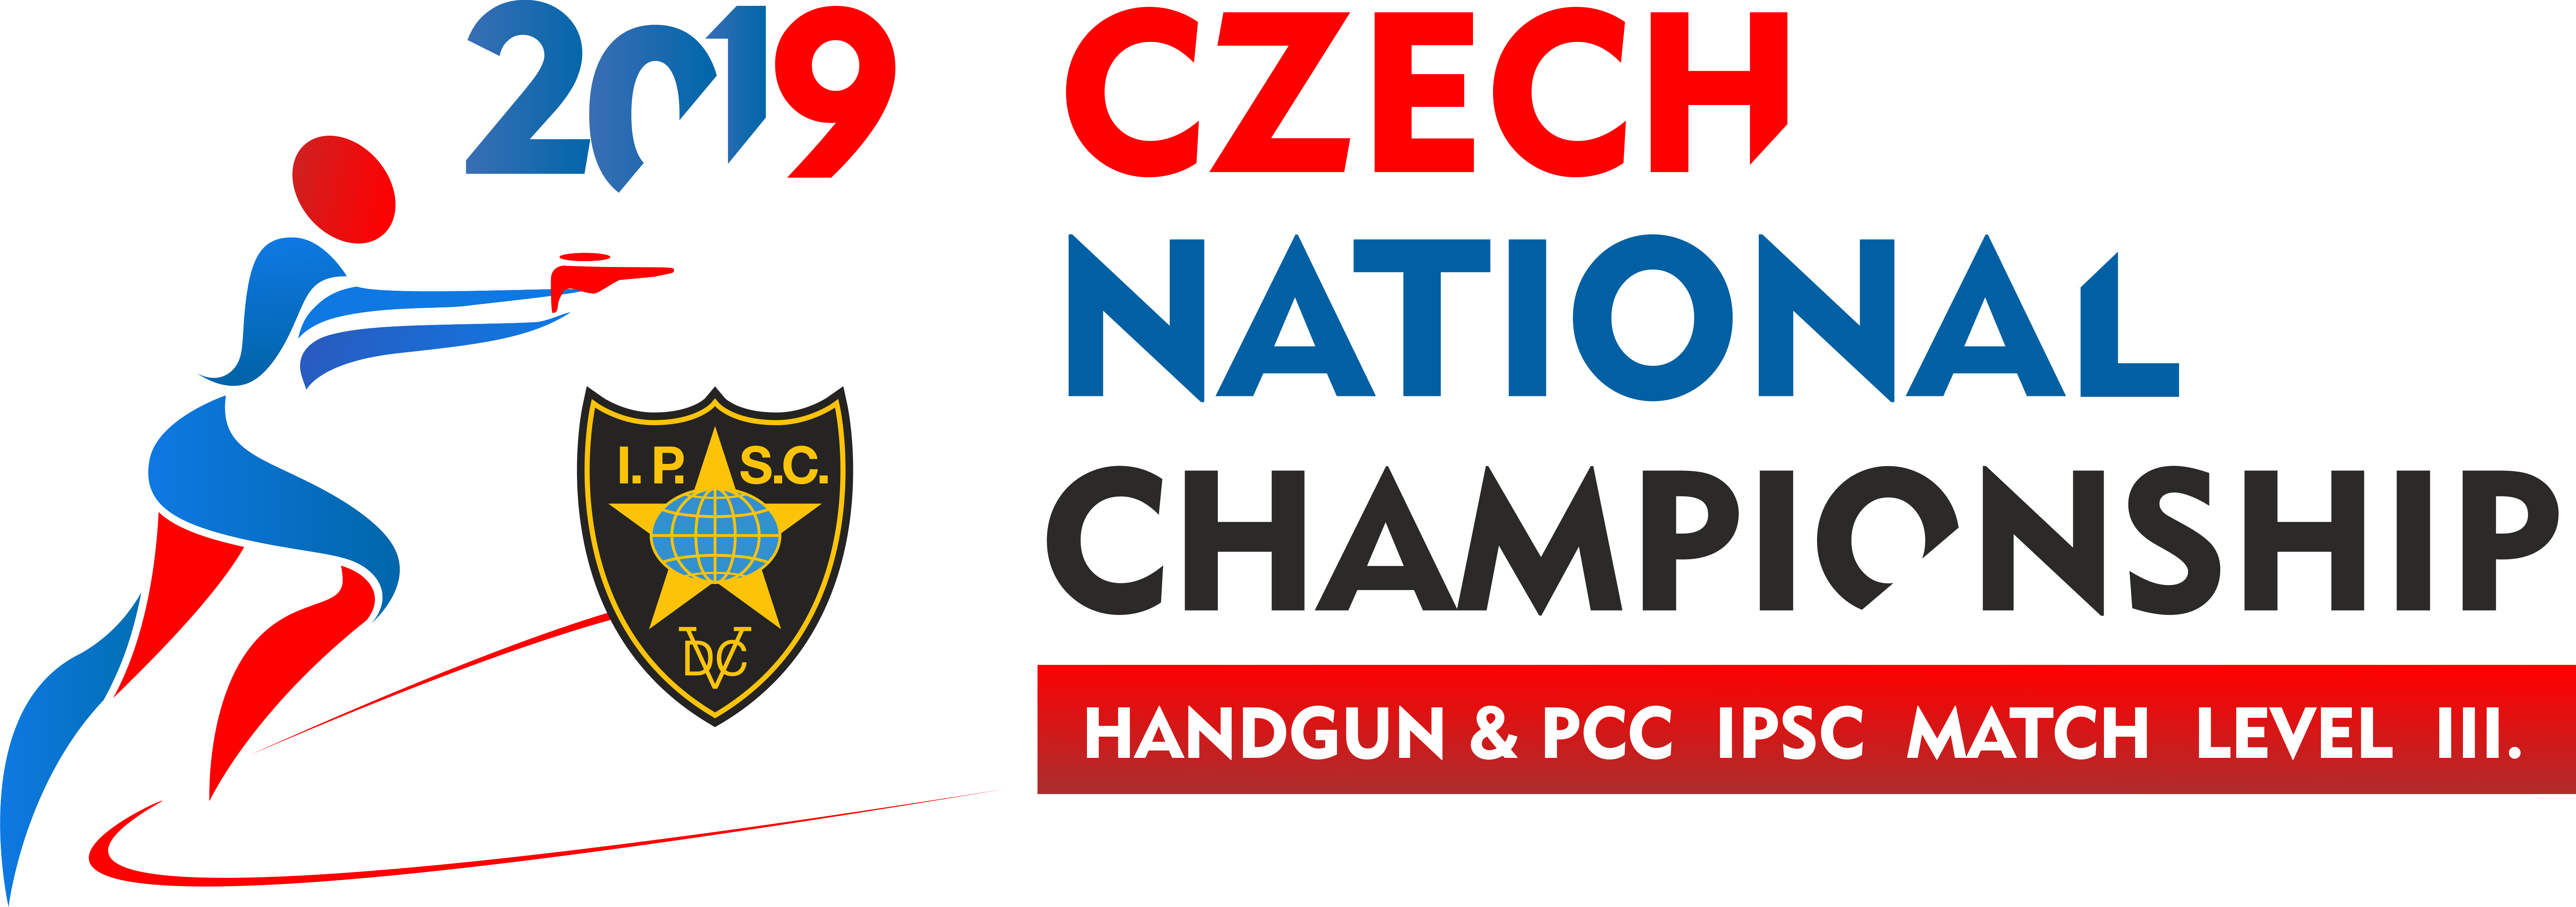 CNC Logo m.png